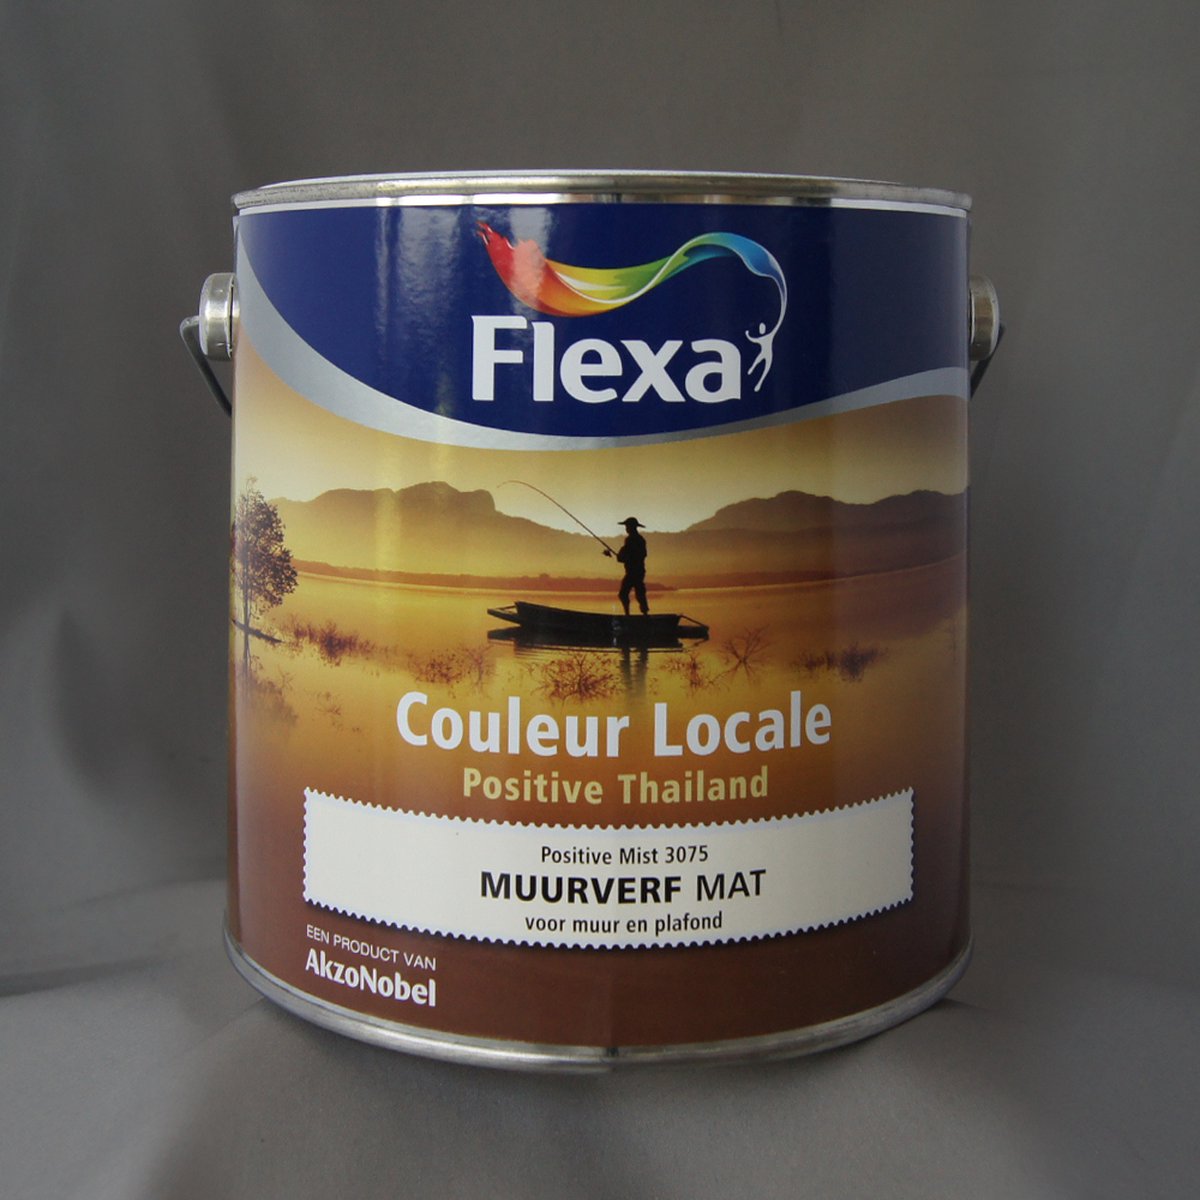 Flexa Couleur Locale - Muurverf Mat - Positive Thailand Mist - 3075 - 2,5 liter